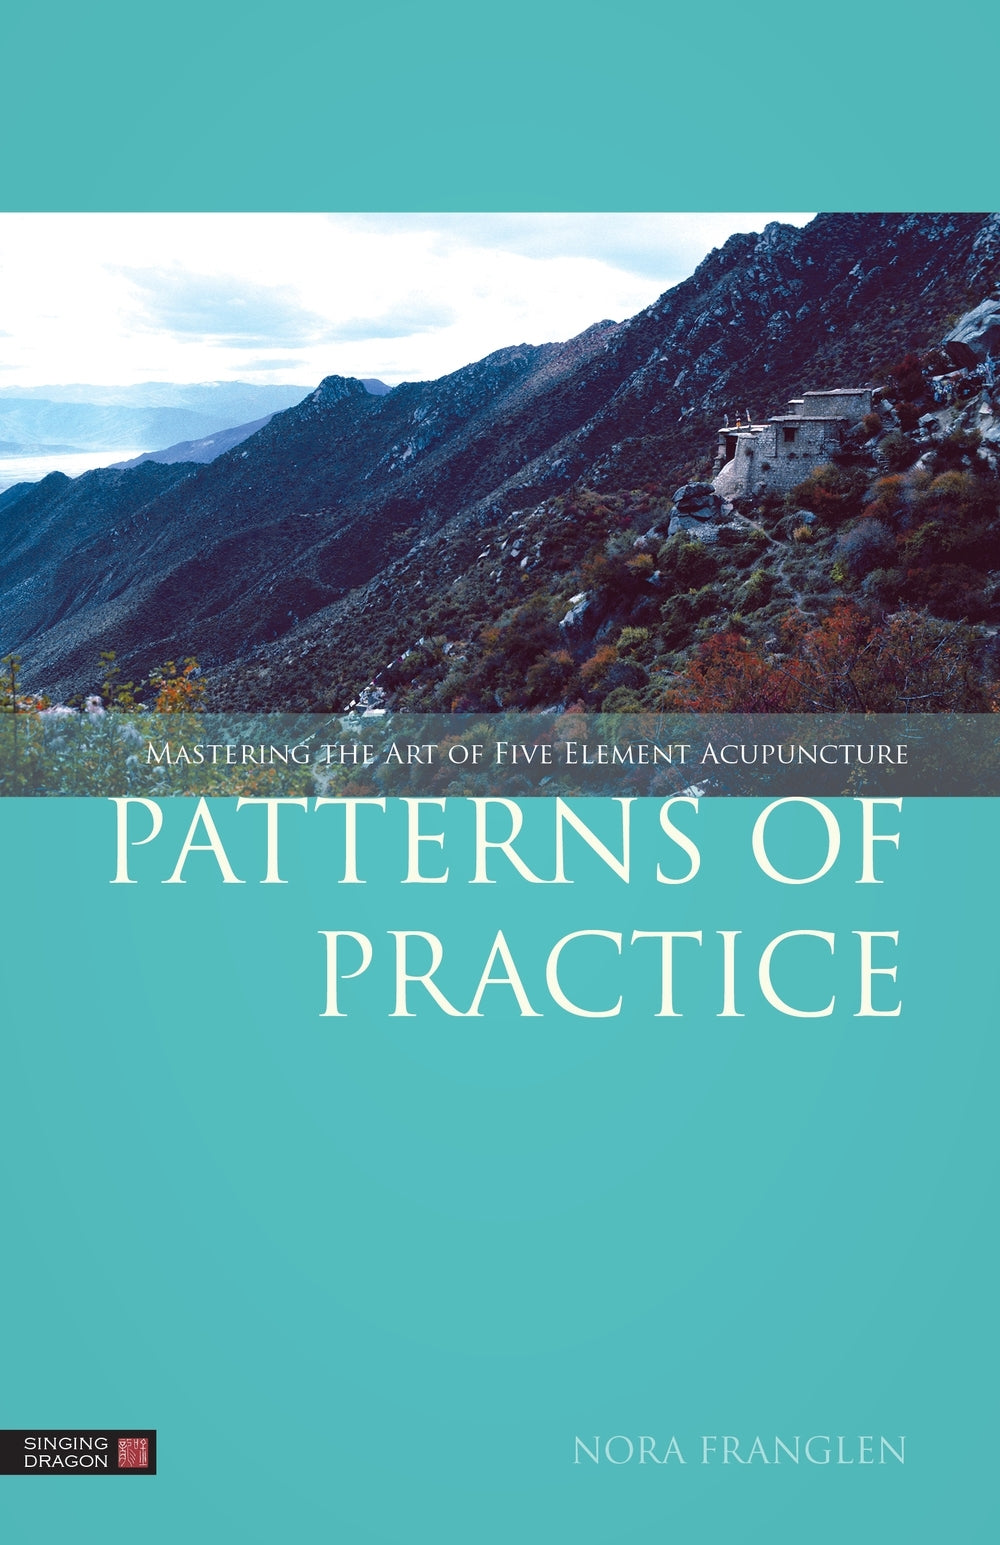 Patterns of Practice by Nora Franglen